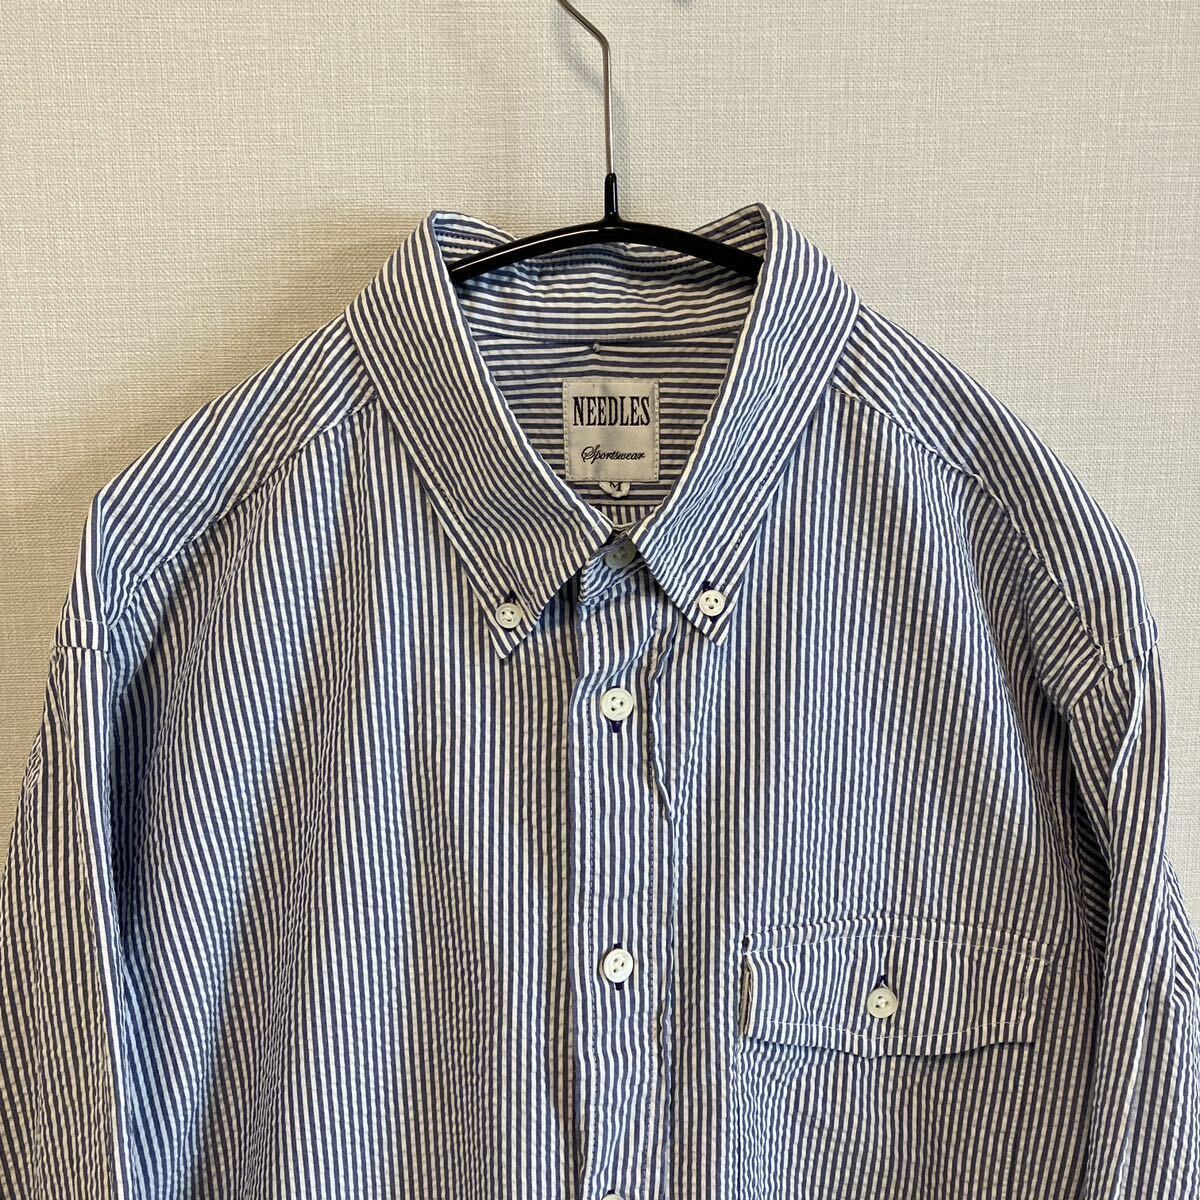  Needles Needles Sportswear / shirt jacket / long sleeve shirt / stripe /sia soccer / blue / made in Japan / size M